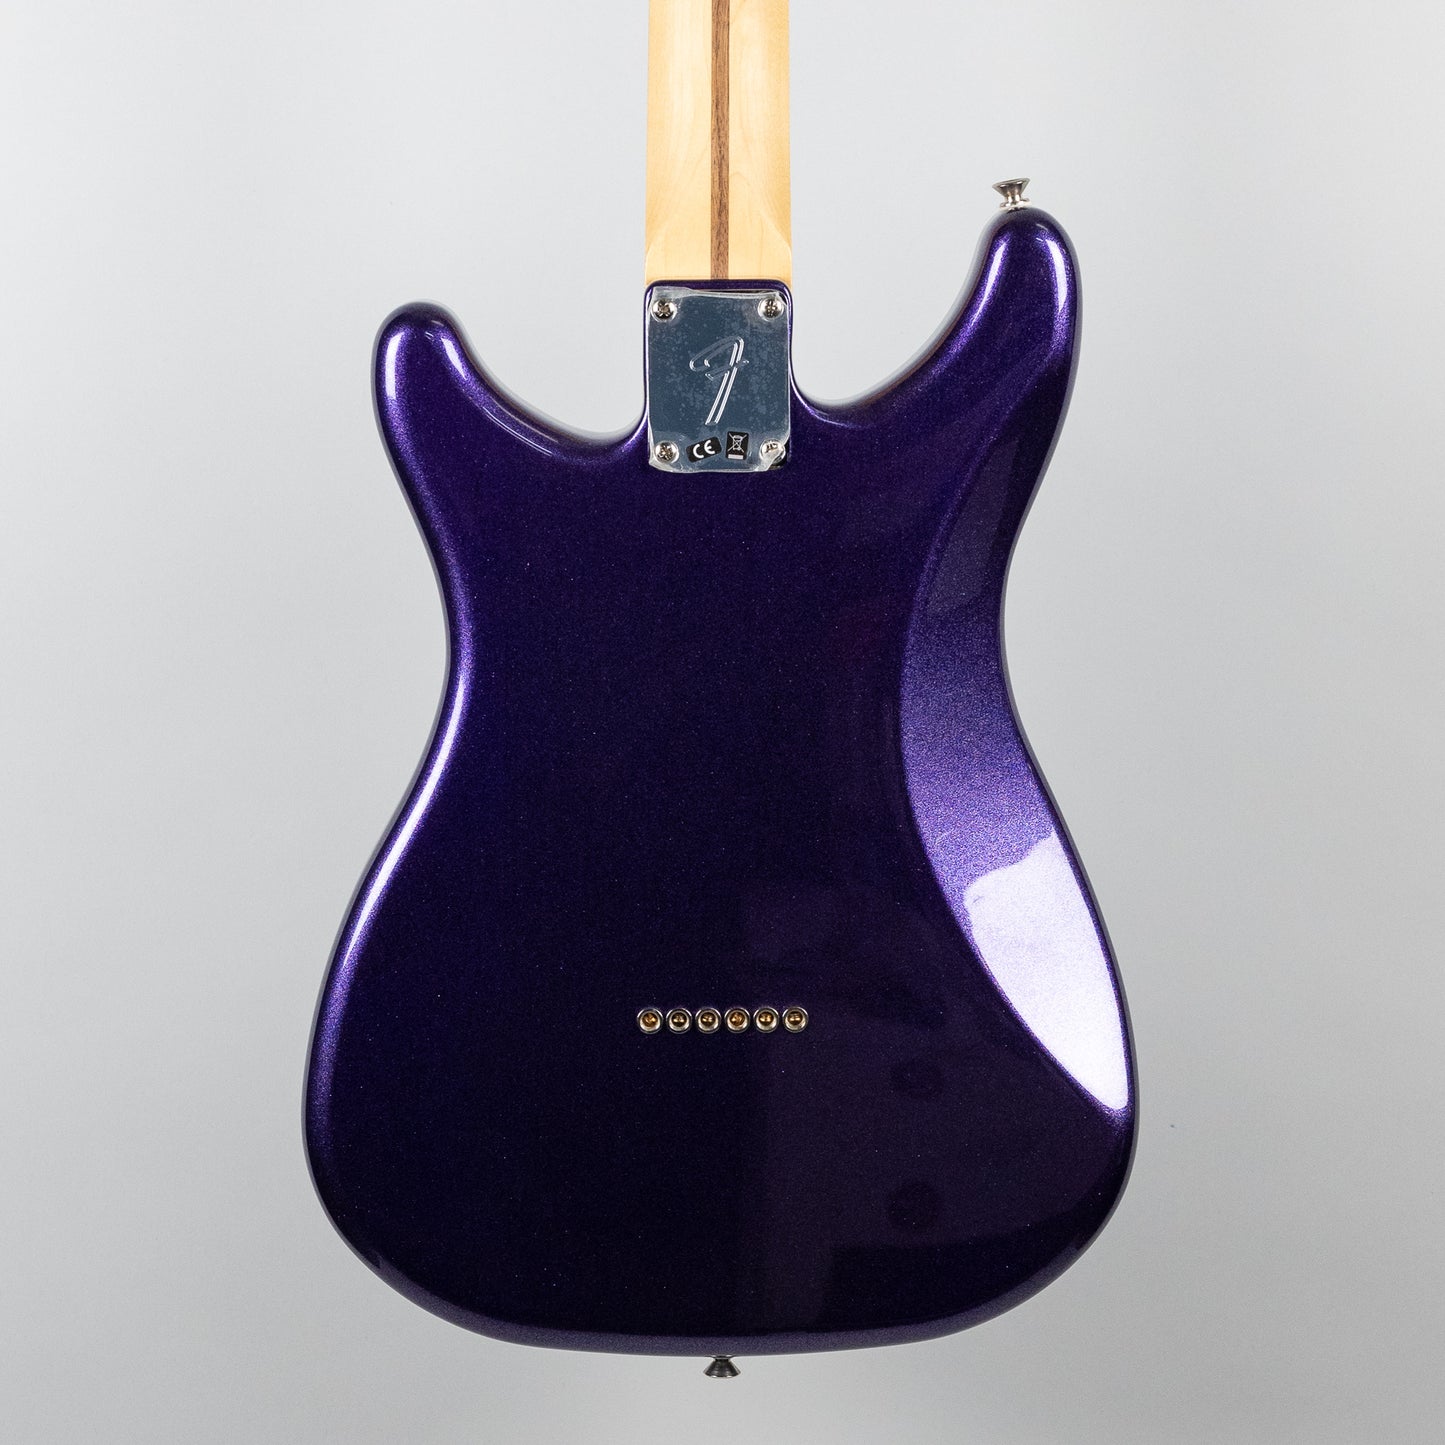 Fender Player Lead III in Purple Metallic (MX20174352)